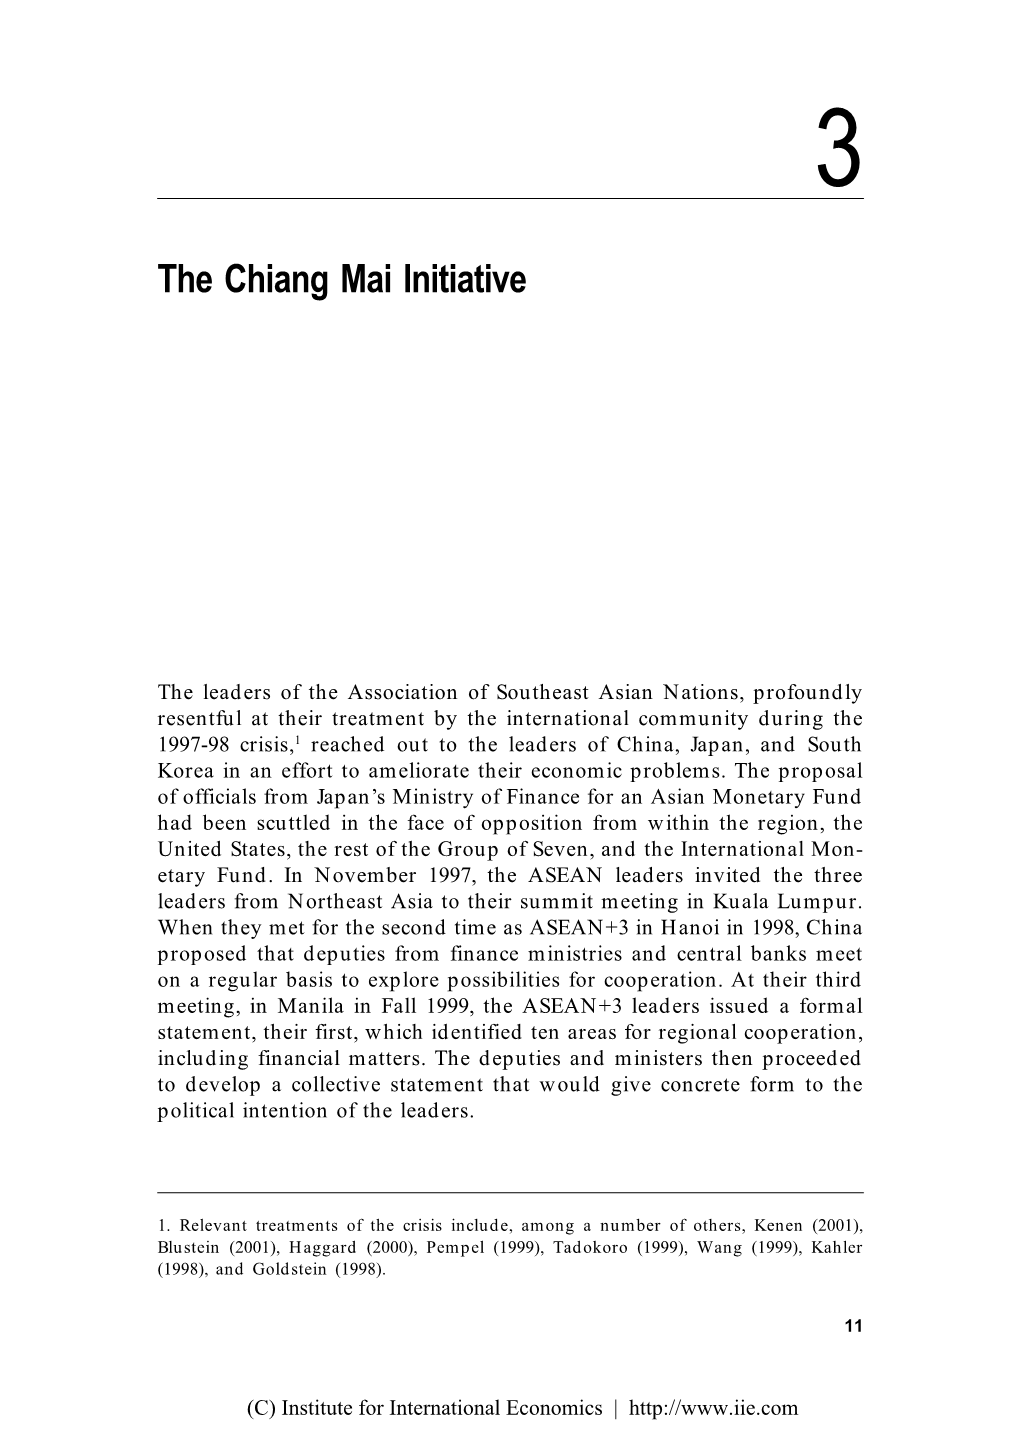 Chapter 3: the Chiang Mai Initiative